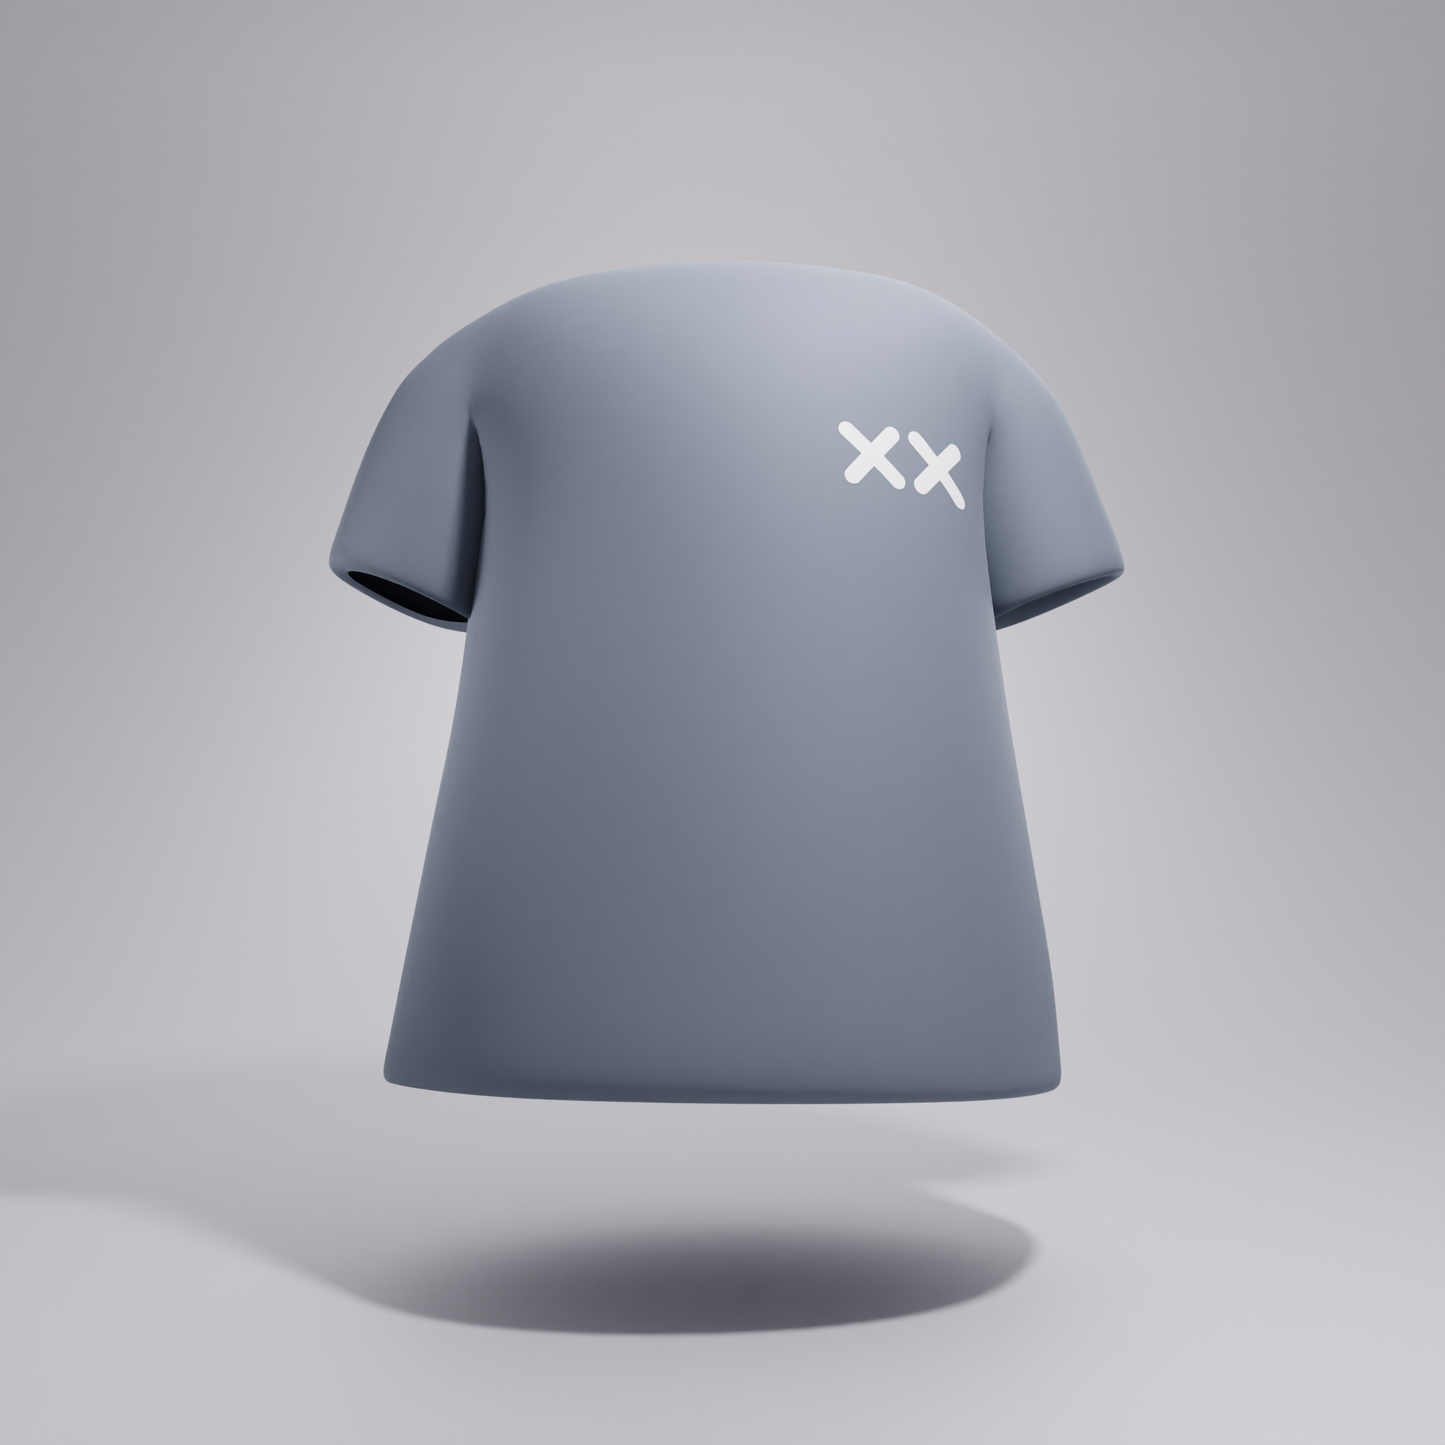 XX "Members Only" T - Shirt (Digital Download)